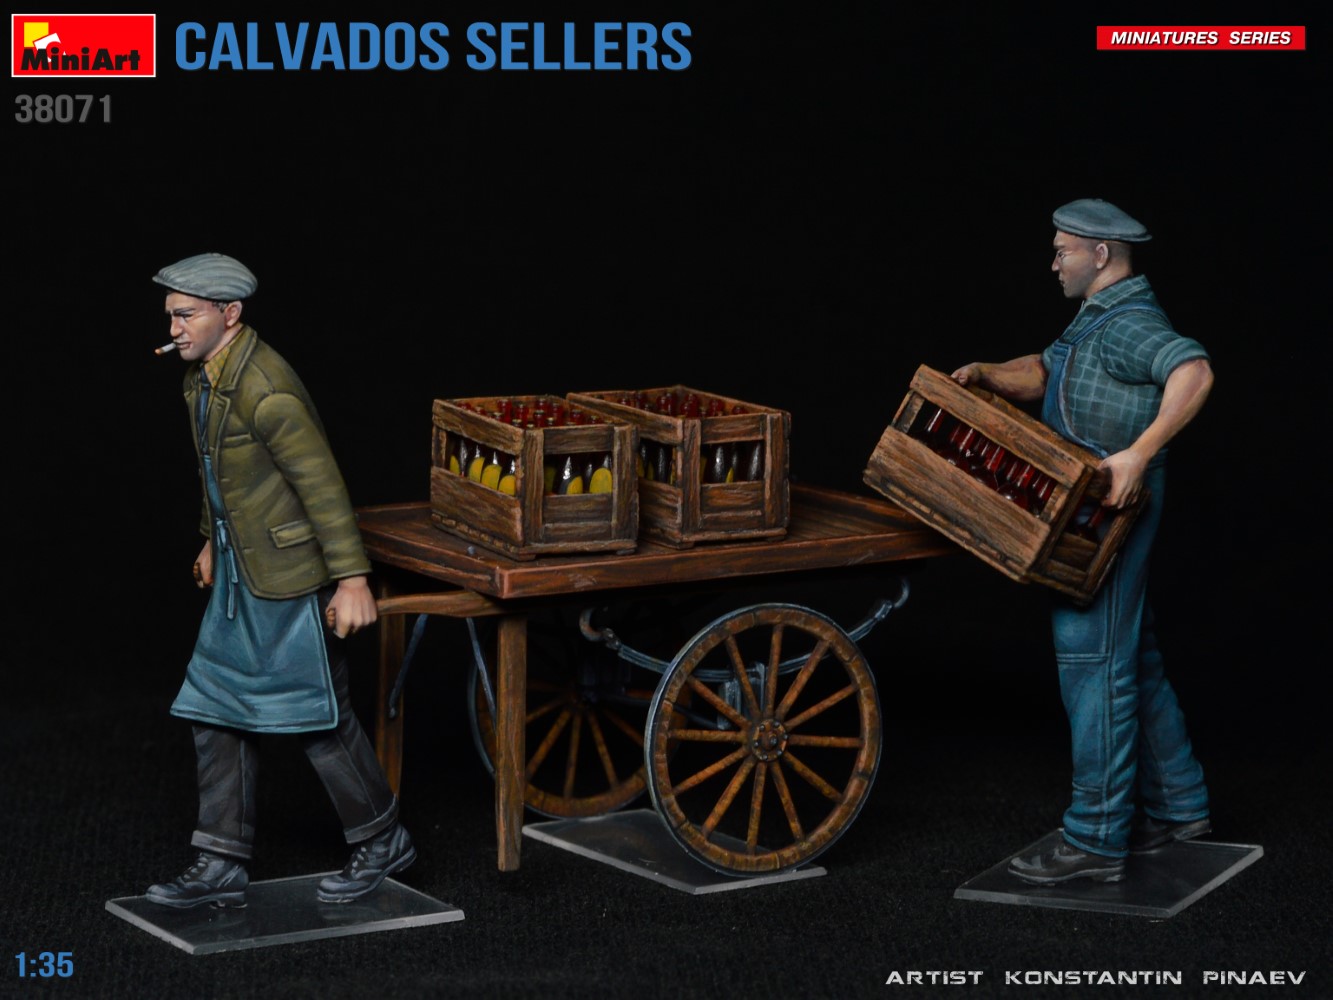 Miniart 1/35 Calvados Sellers # 38071